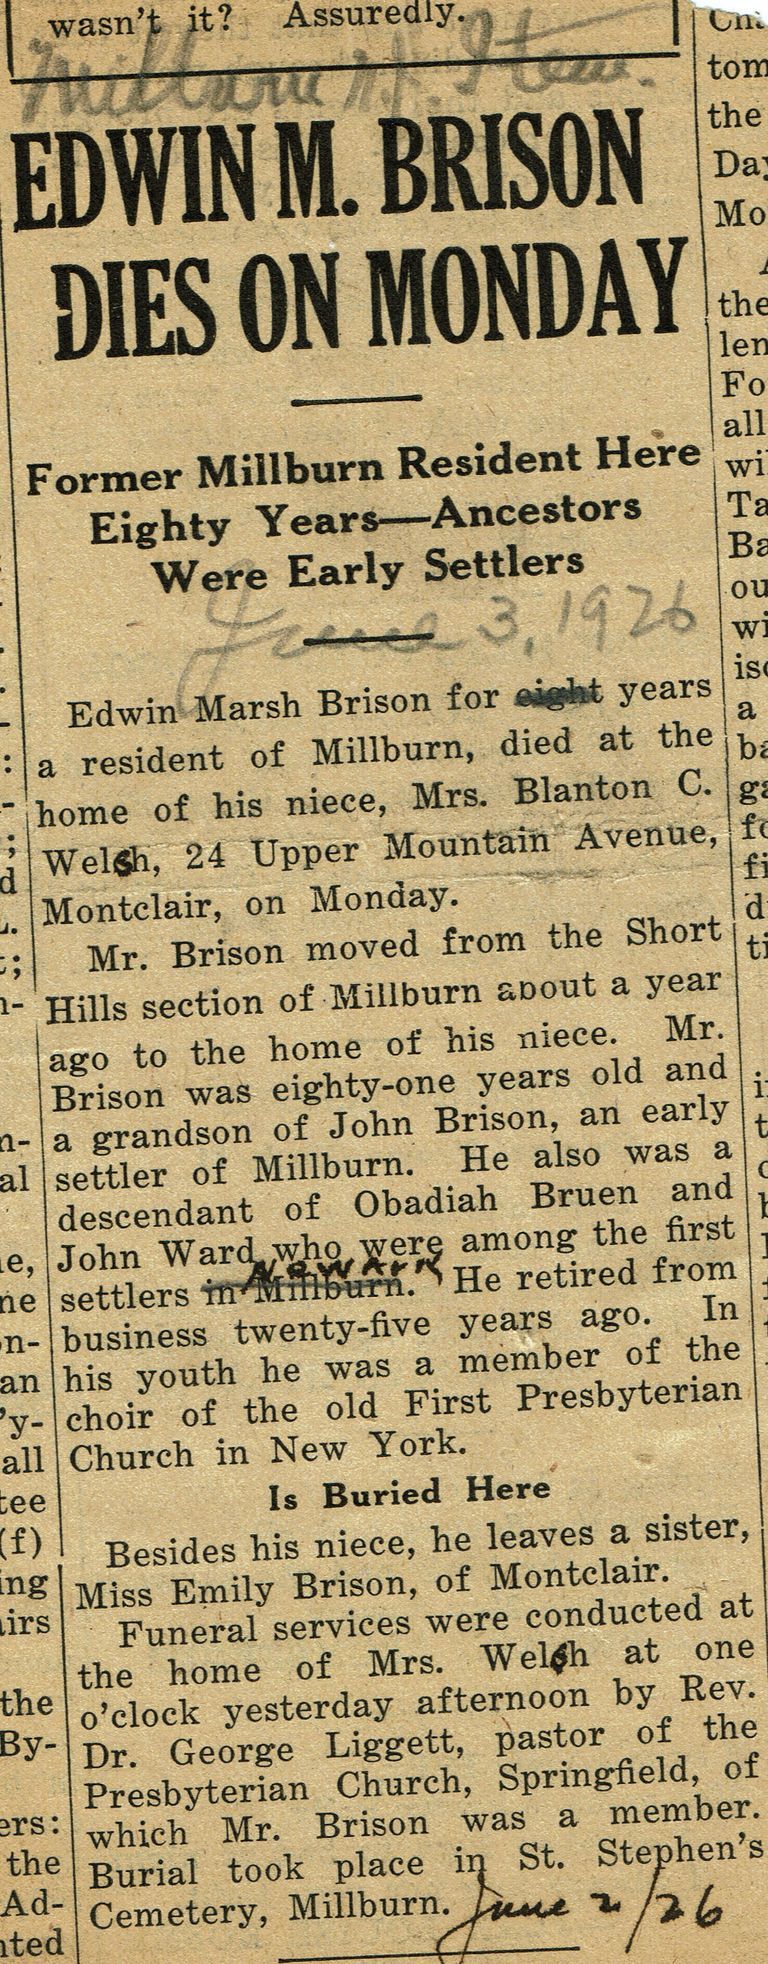          Brison: Edwin Marsh Brison Obituary, The Item, 1926 picture number 1
   